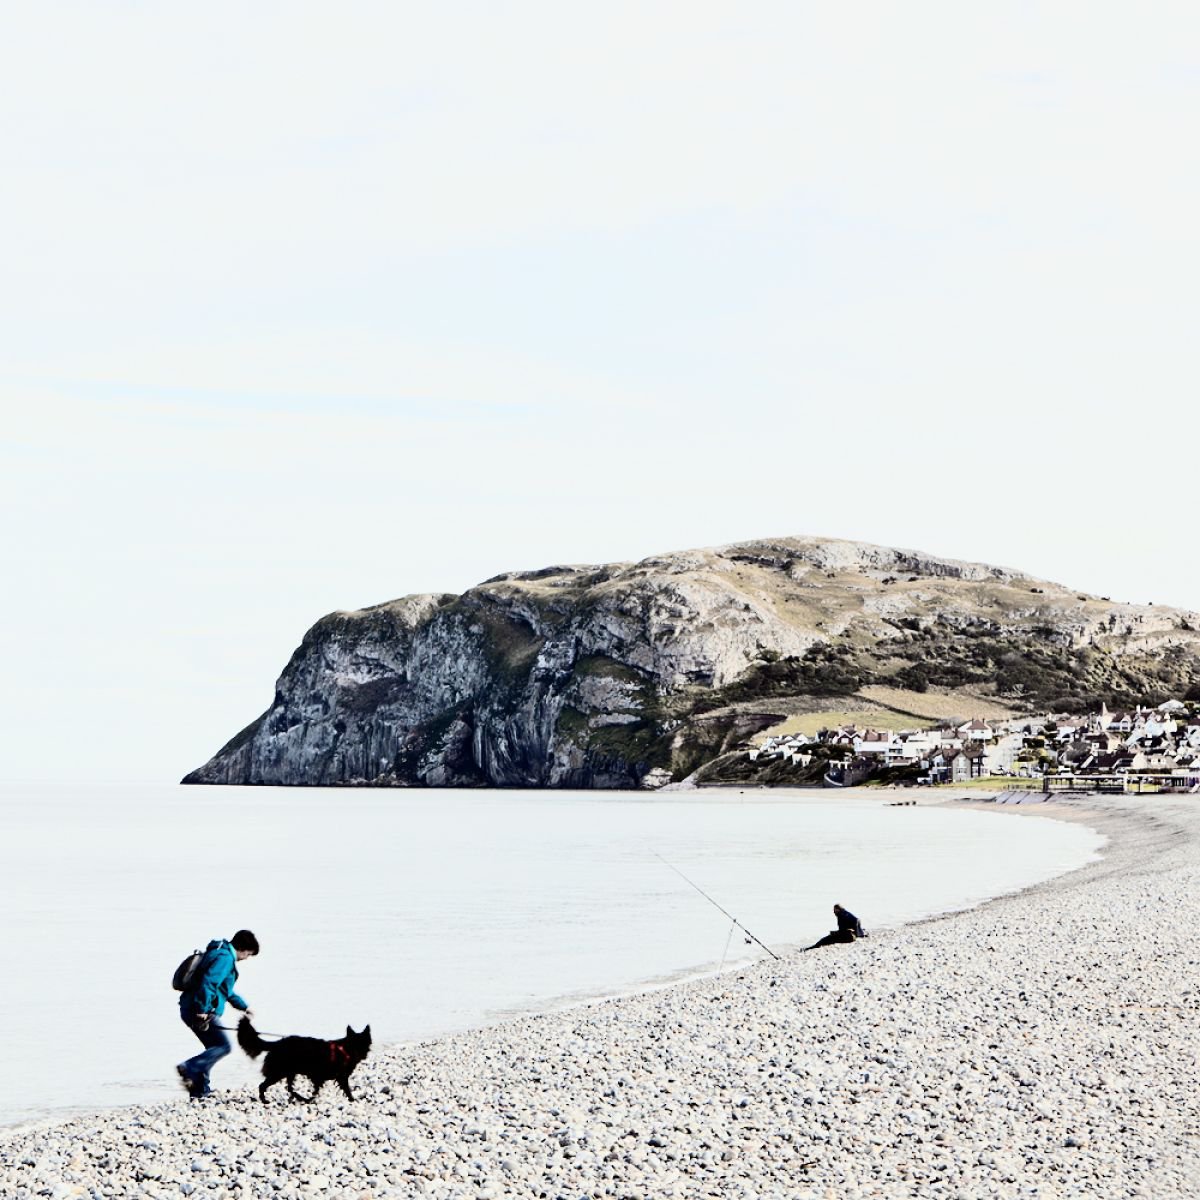 Dog walker & fisherman at Llandudno by Steve Deer